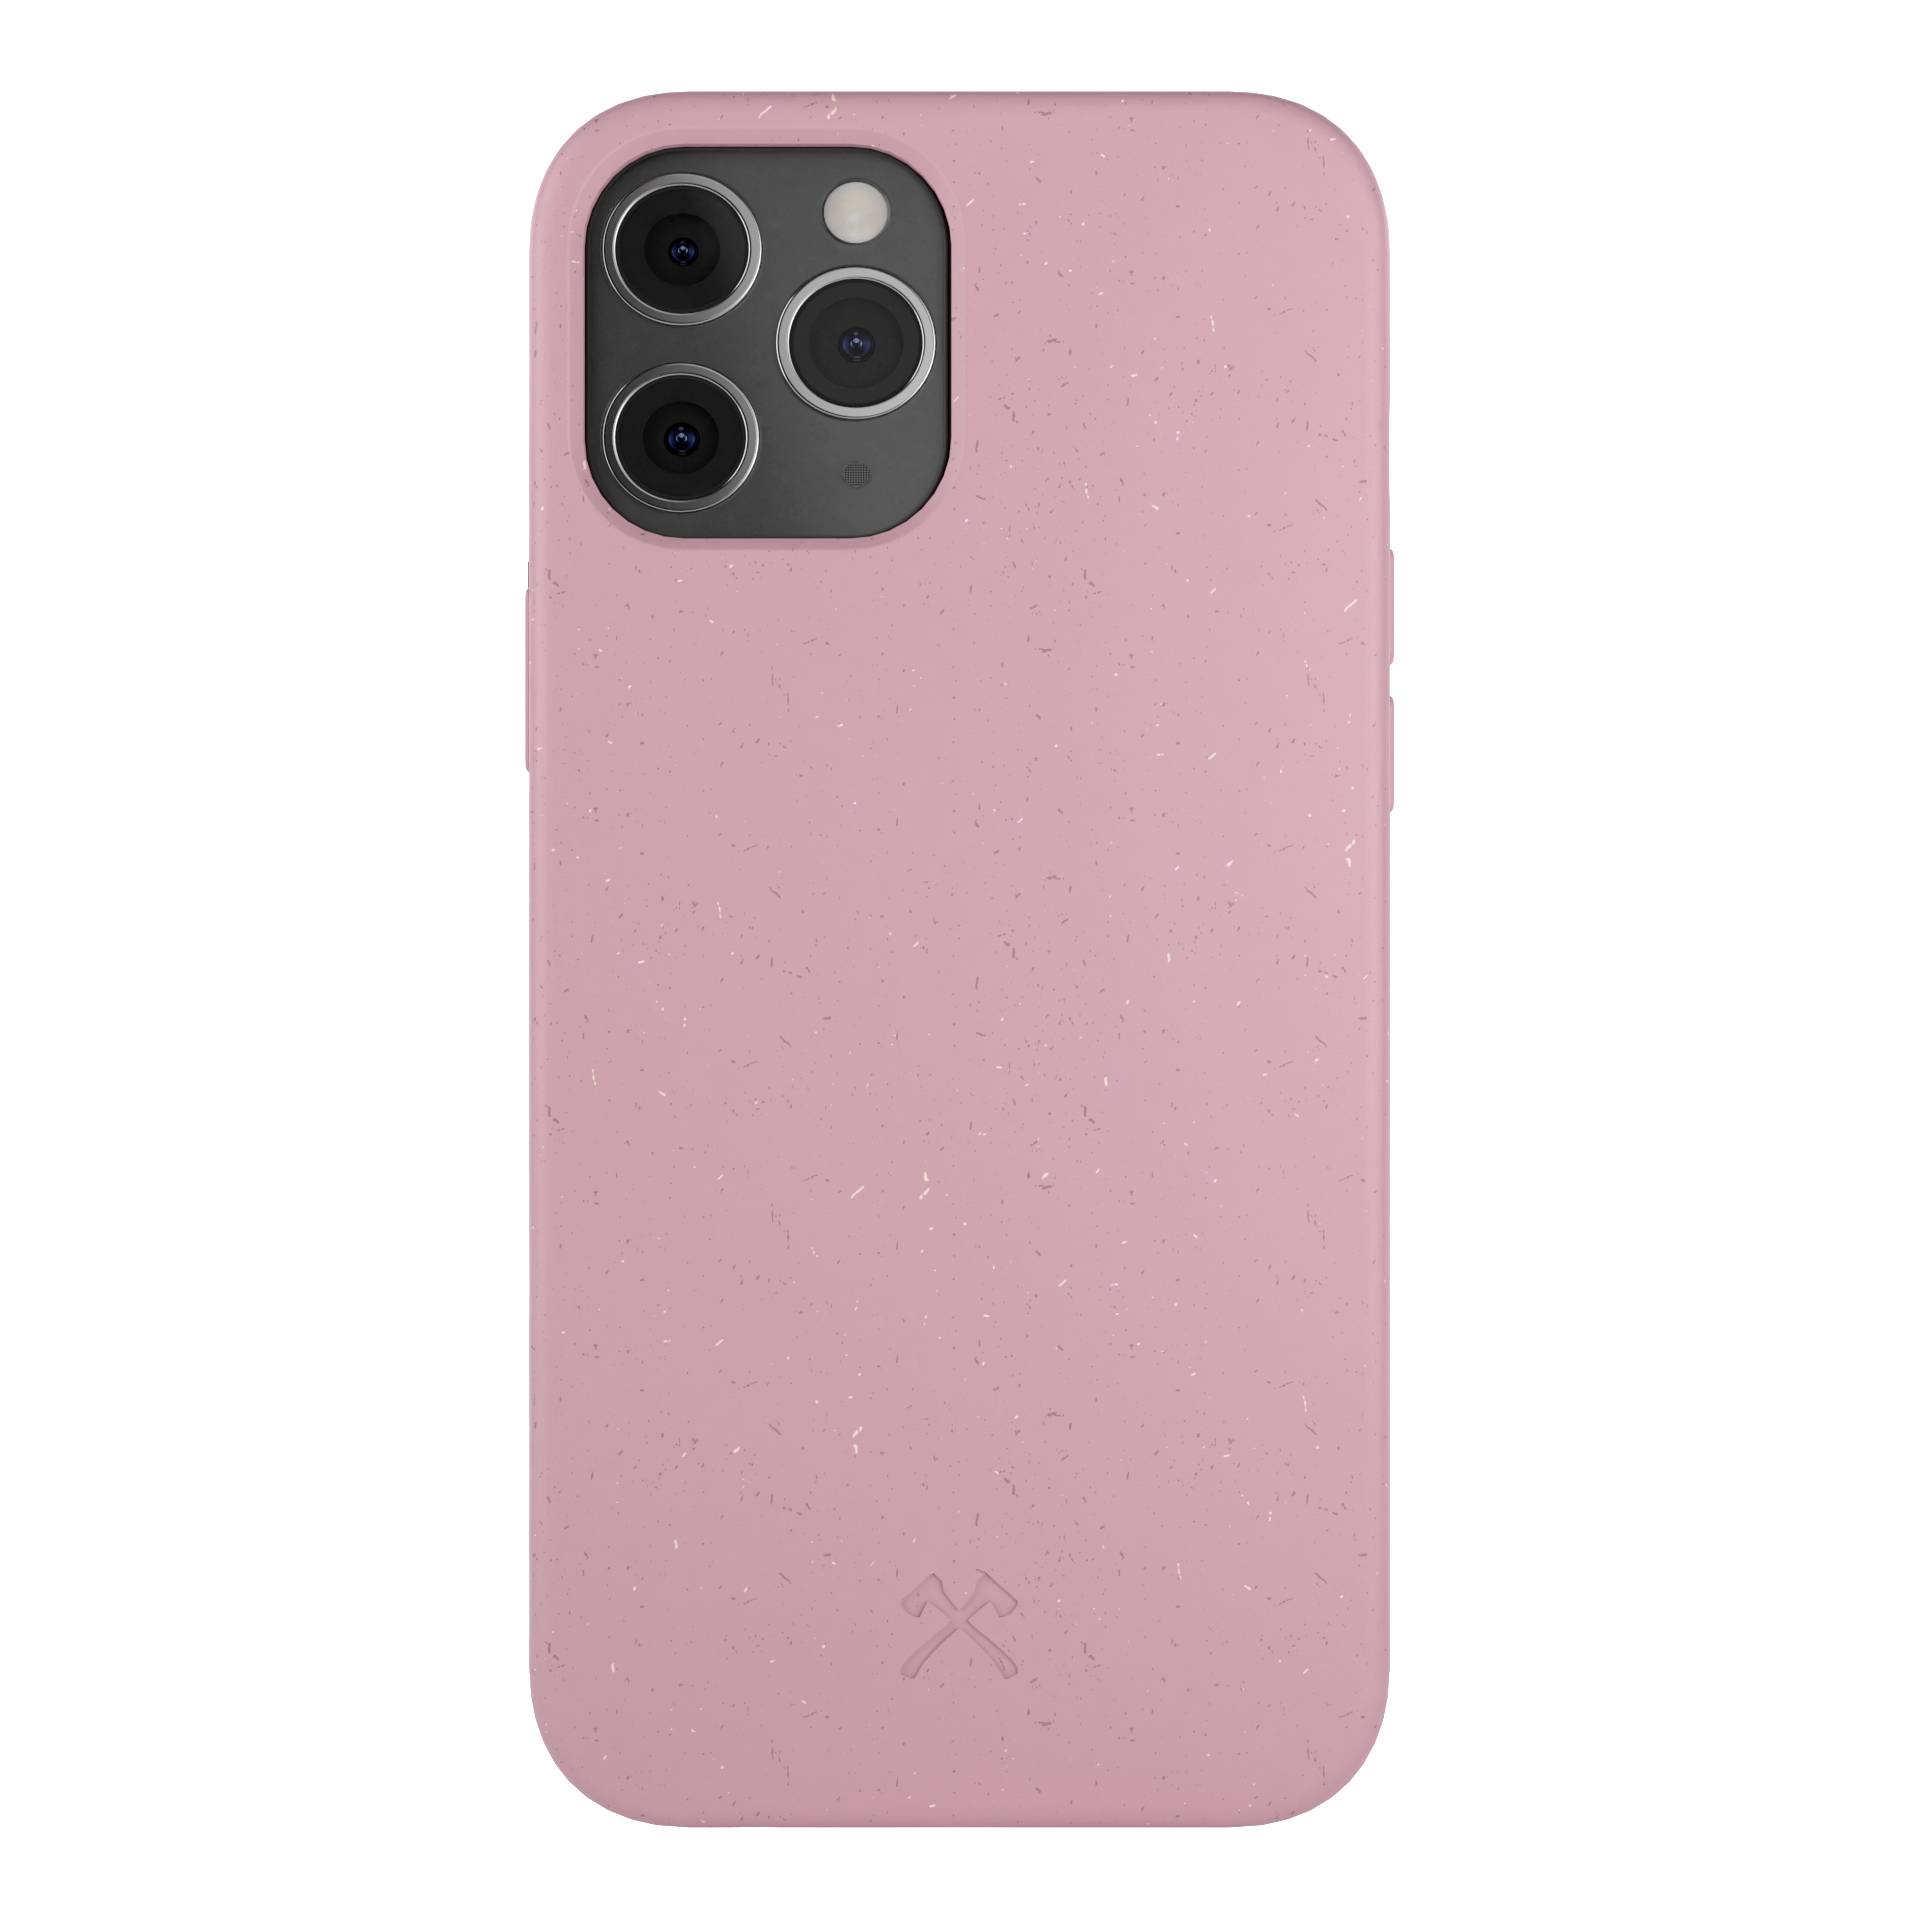 Woodcessories Bio Case AM iPhone 12 / 12 Pro Pink